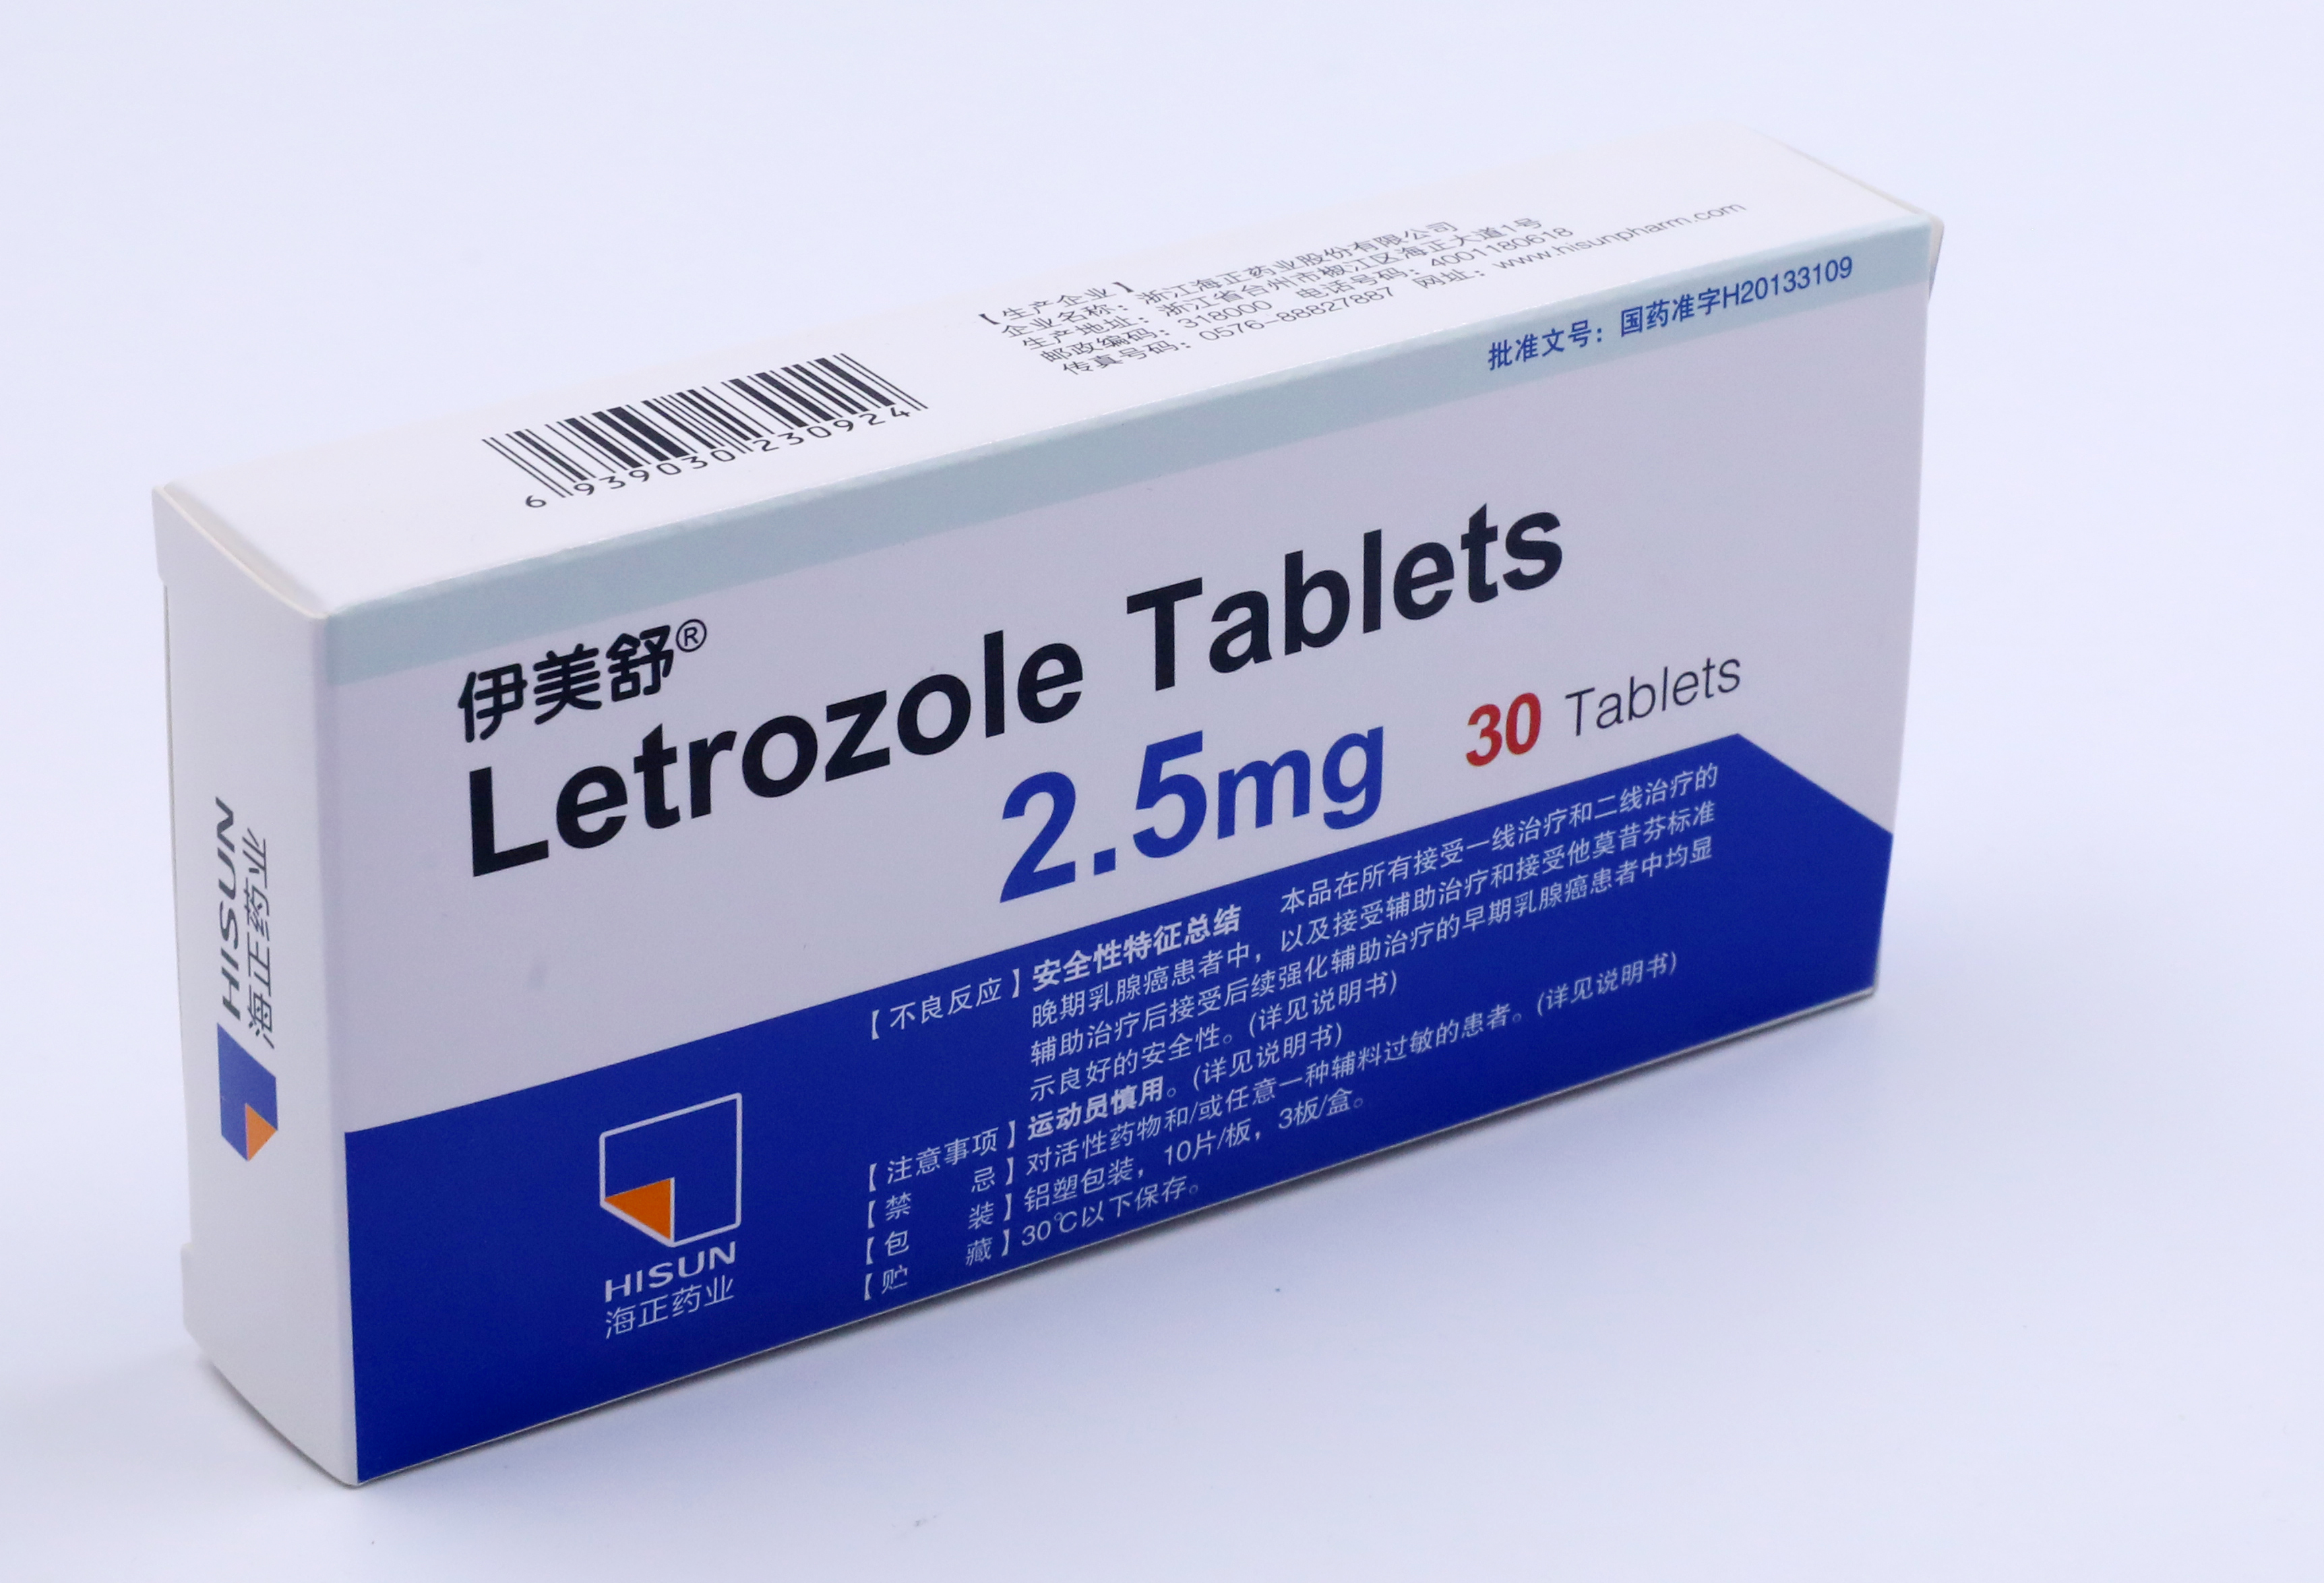 Letrozole Tablets (2.5mg)